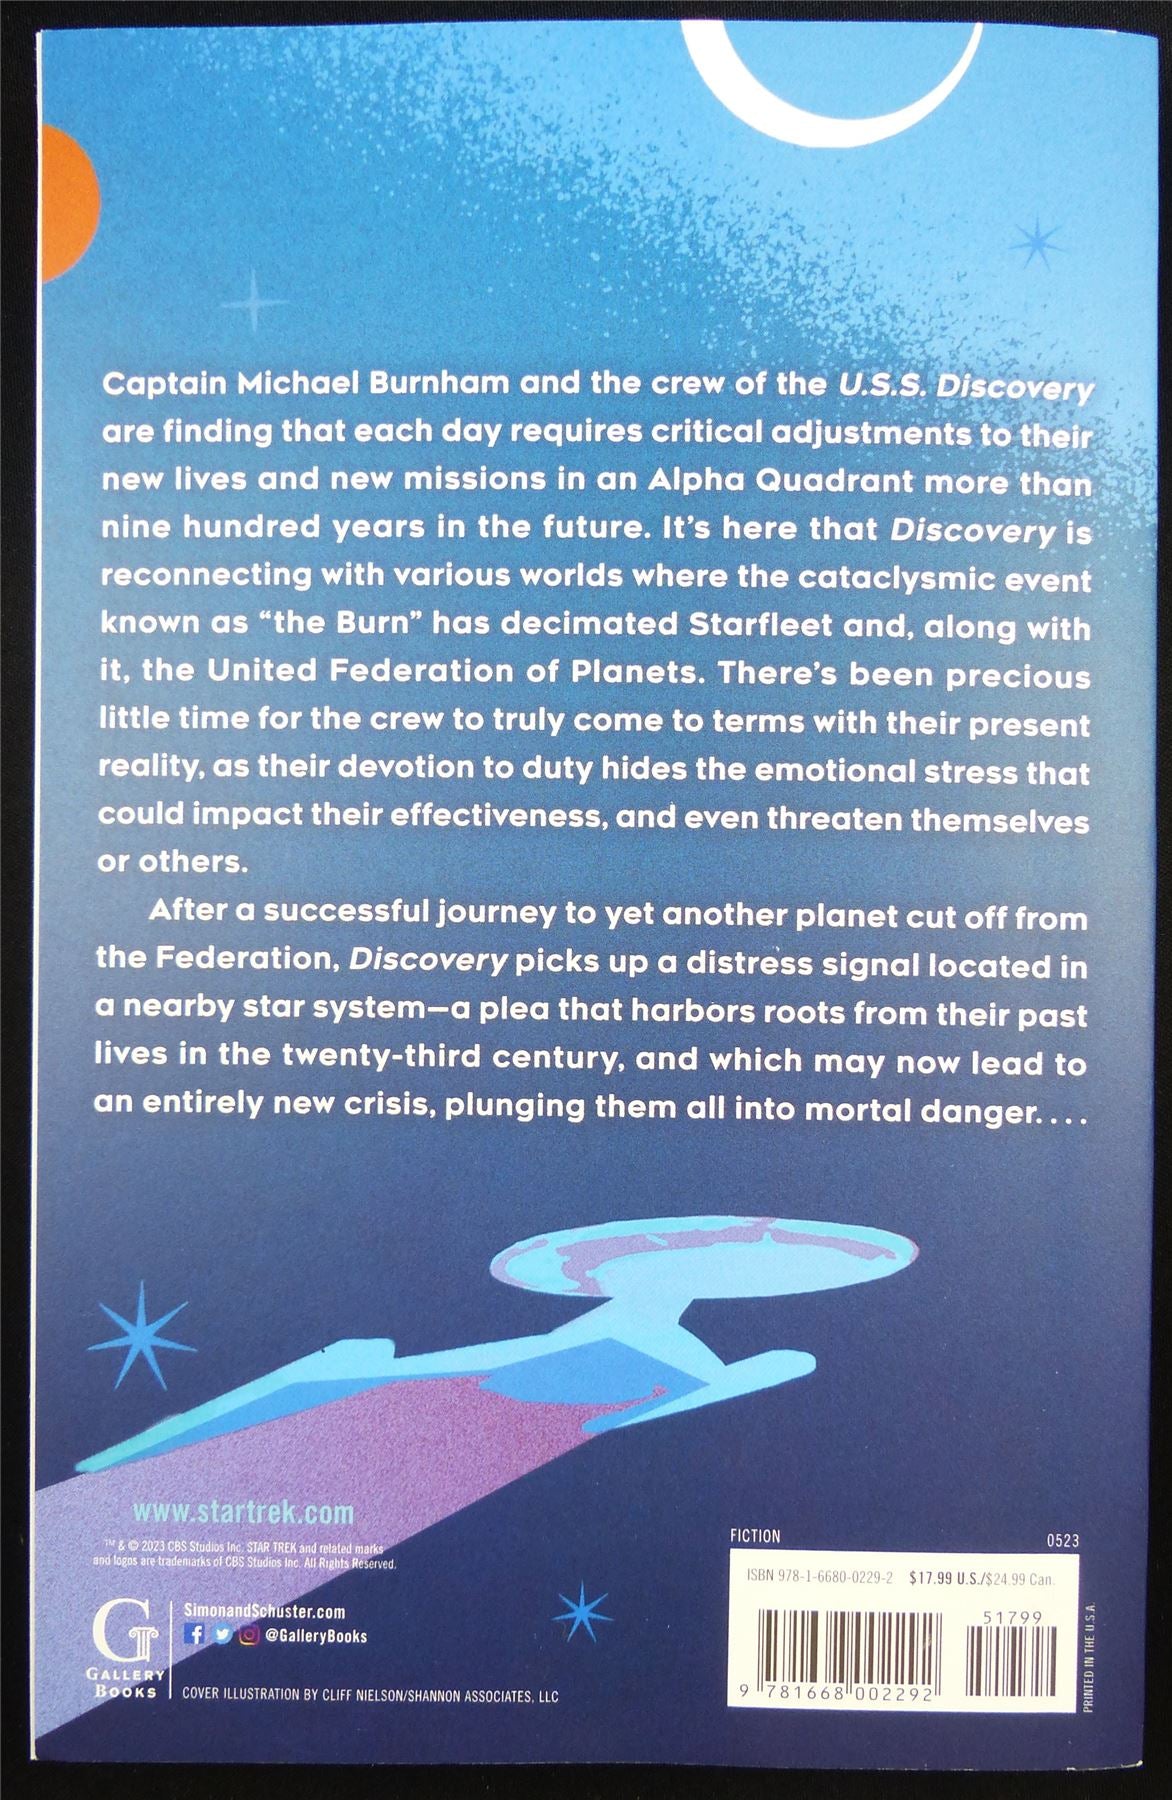 STAR Trek: Discovery: Somewhere to Belong - Gallery Books Novel Softback #25N